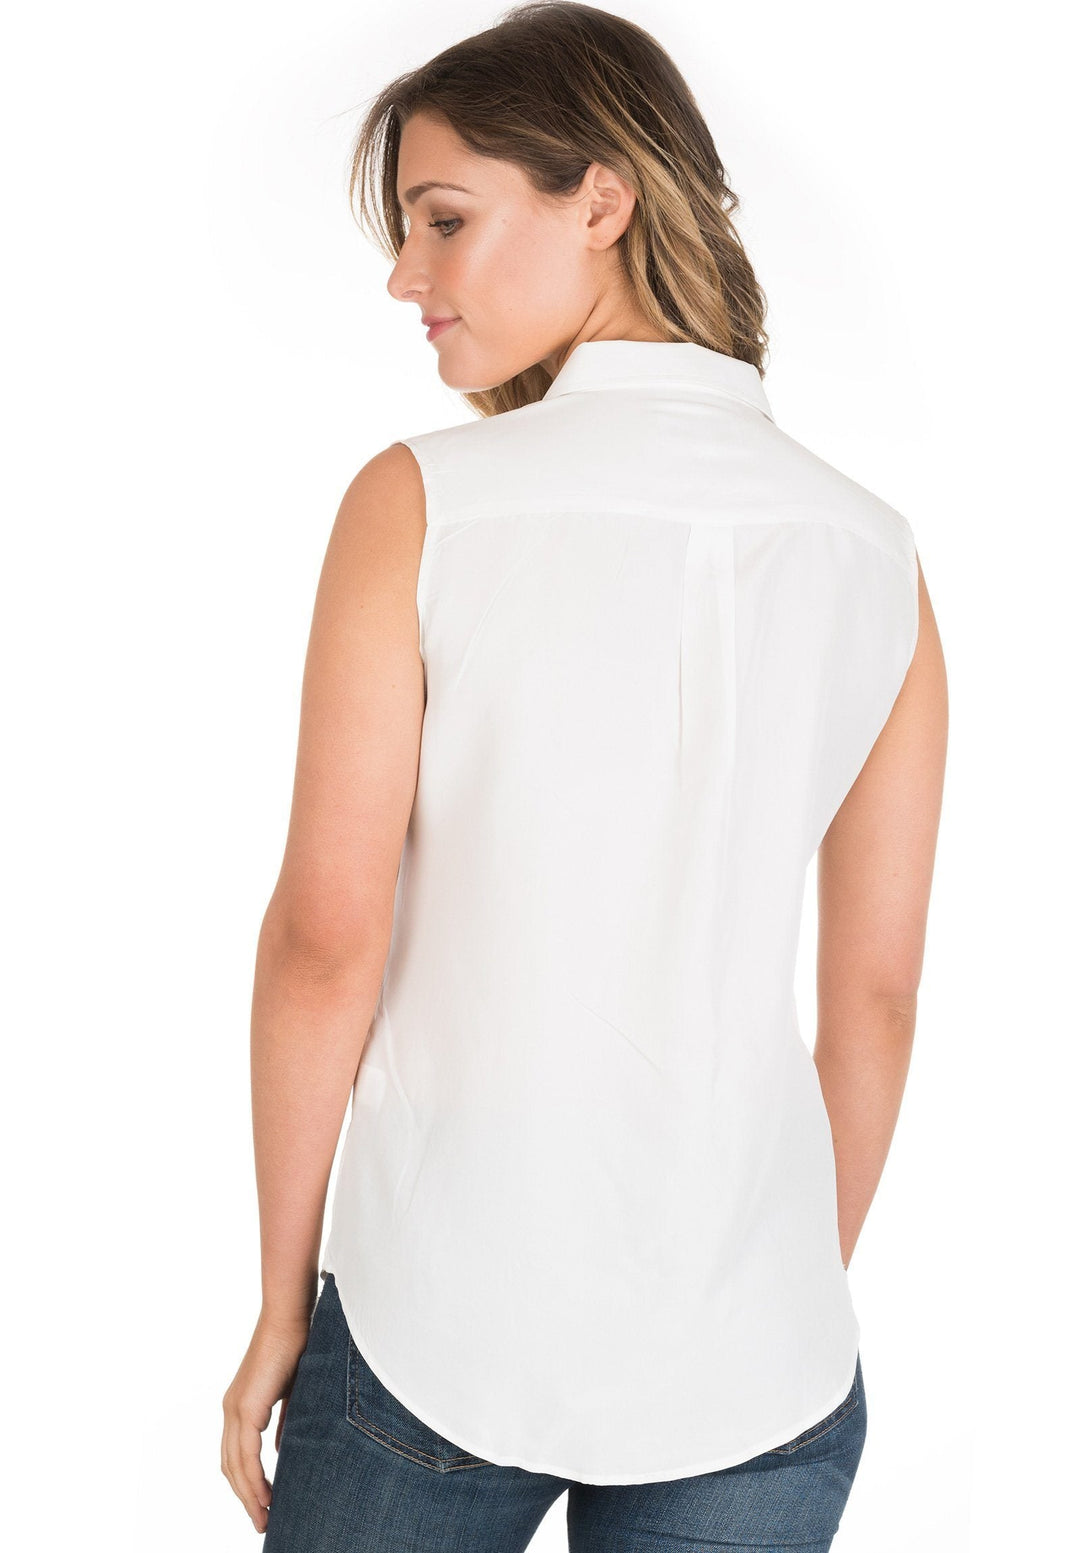 Aura Silk White, Sand washed sleeveless shirt with pockets